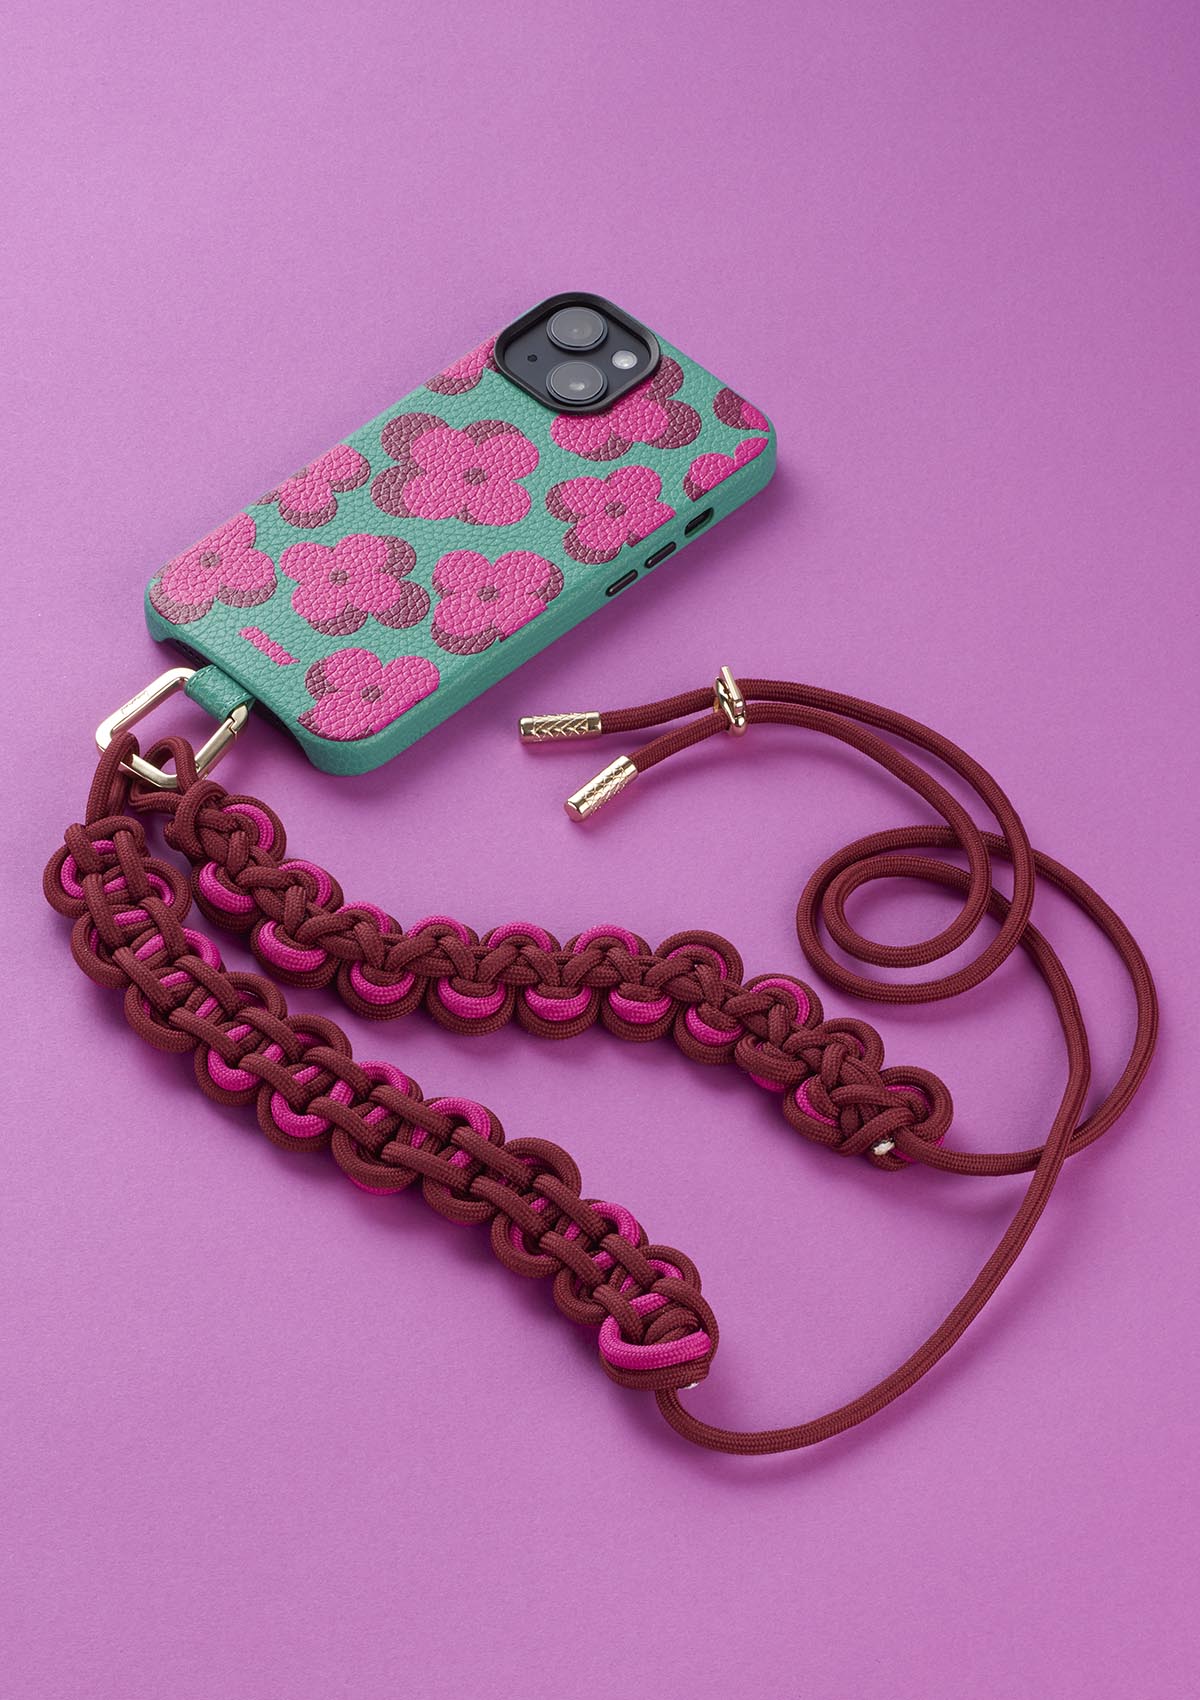 Cover Untags per iPhone 14 Plus in colore verde con fiori e Phone Necklace Scoubidou regolabile bordeaux e rosa